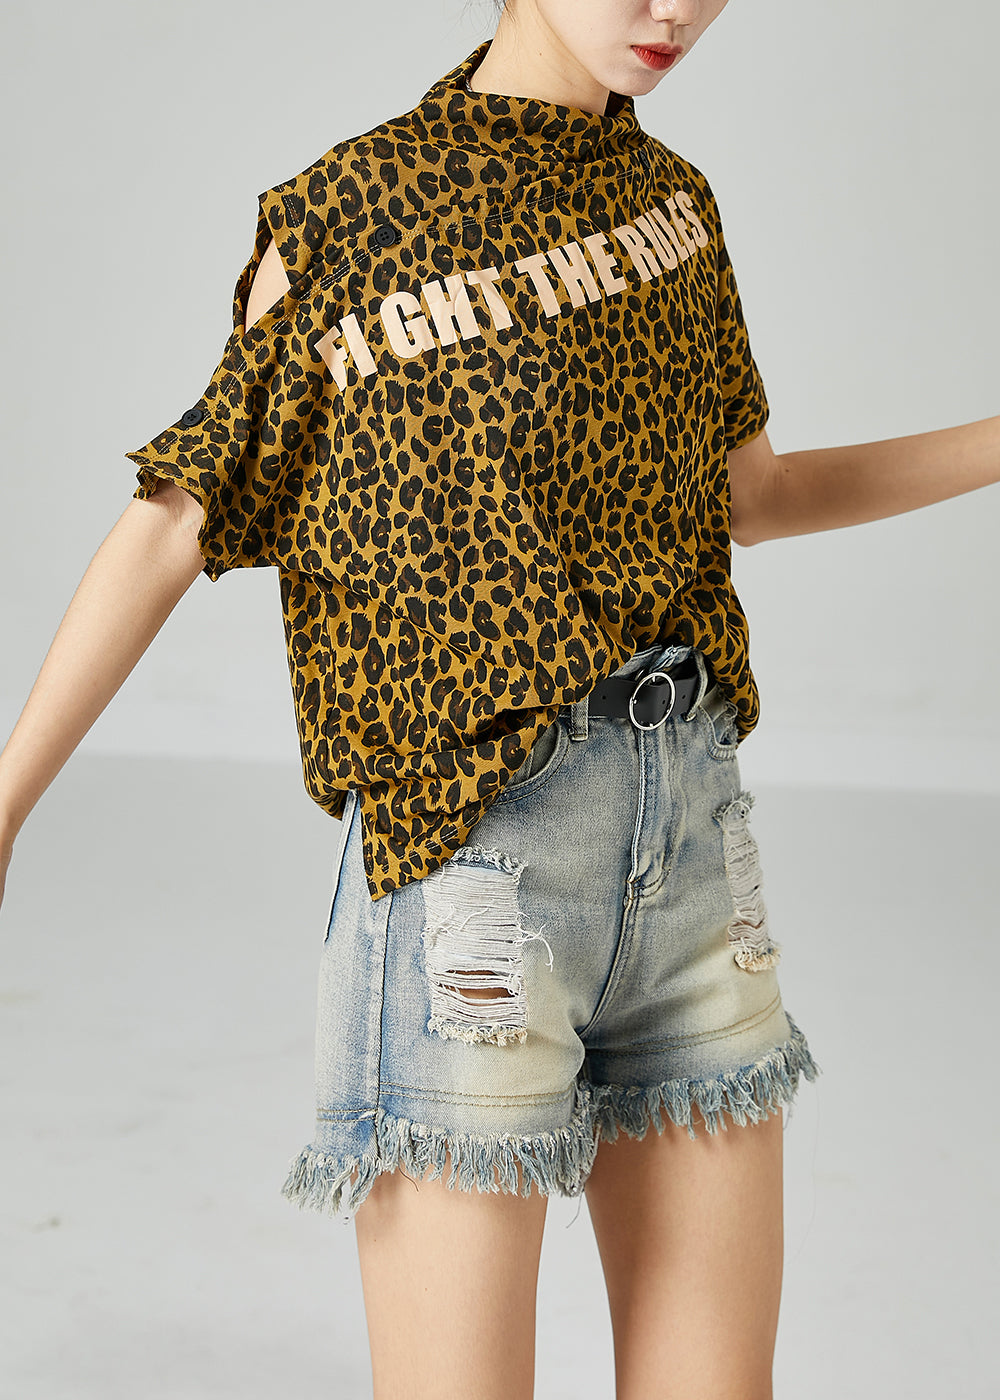 Boho Yellow Cold Shoulder Leopard Print Cotton Tops Summer LY2470 - fabuloryshop